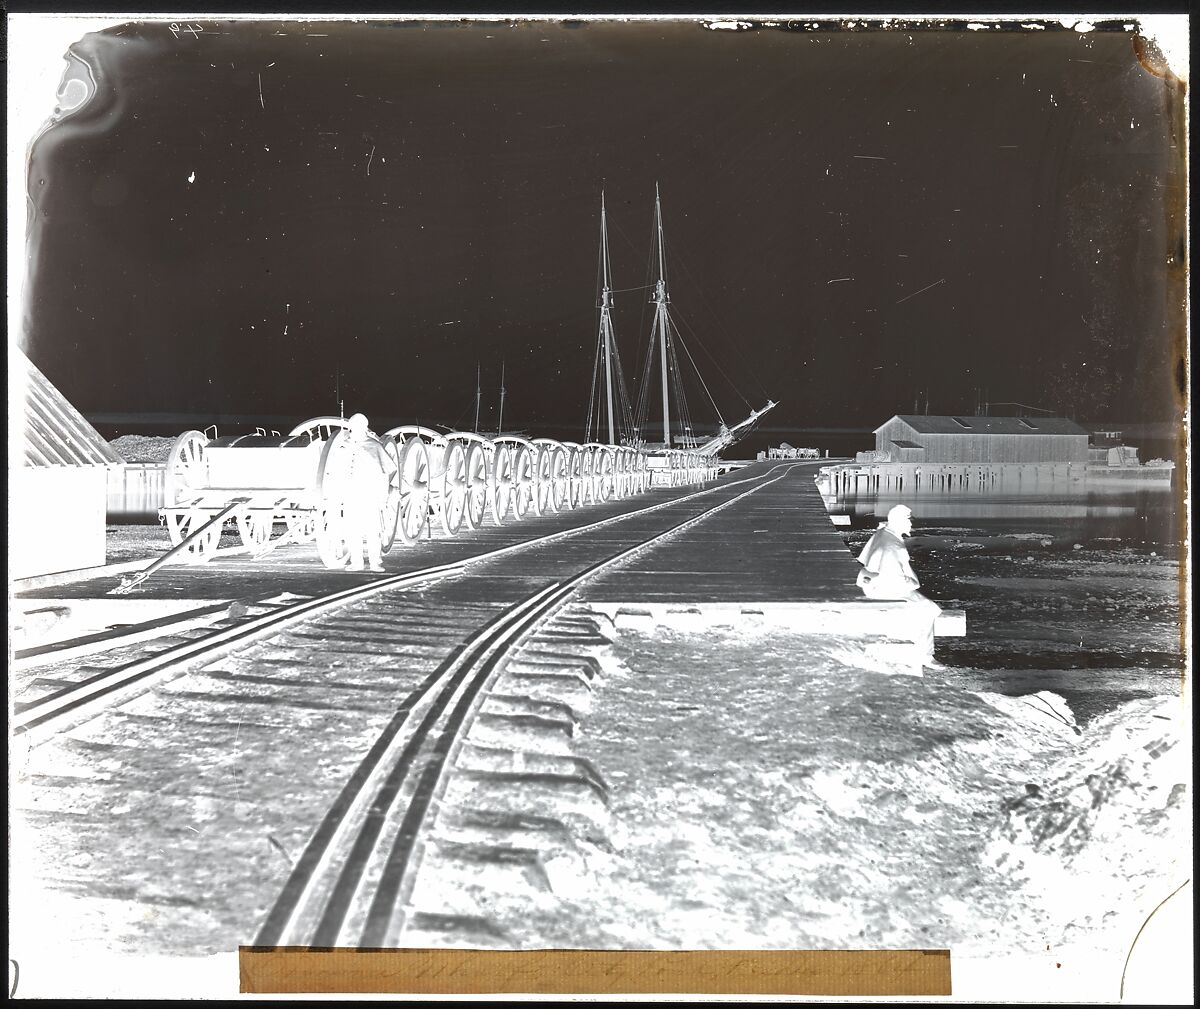 Ordnance Wharf, City Point, Virginia, Thomas C. Roche (American, 1826–1895), Collodion glass negative 